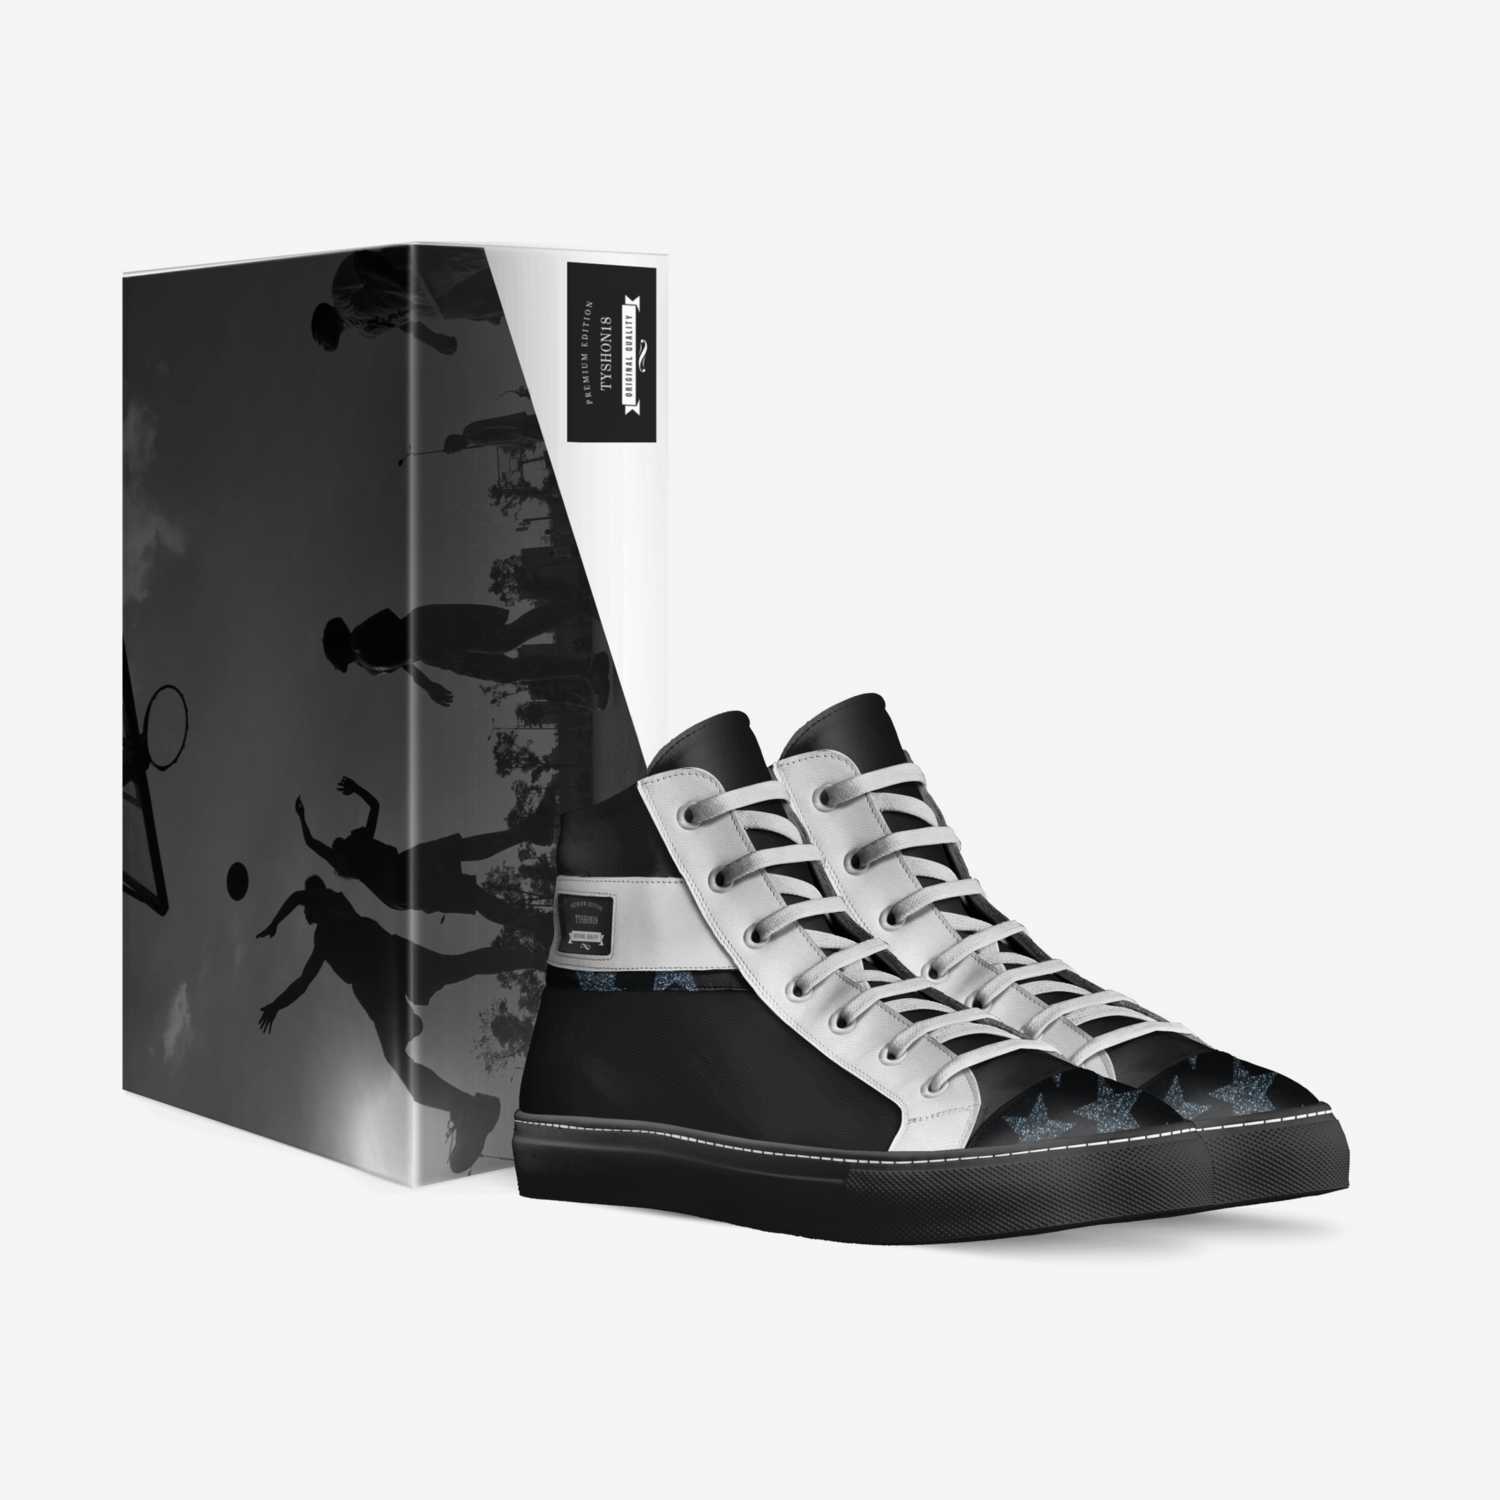 TYSHON18 custom made in Italy shoes by Tyshon Lovett | Box view